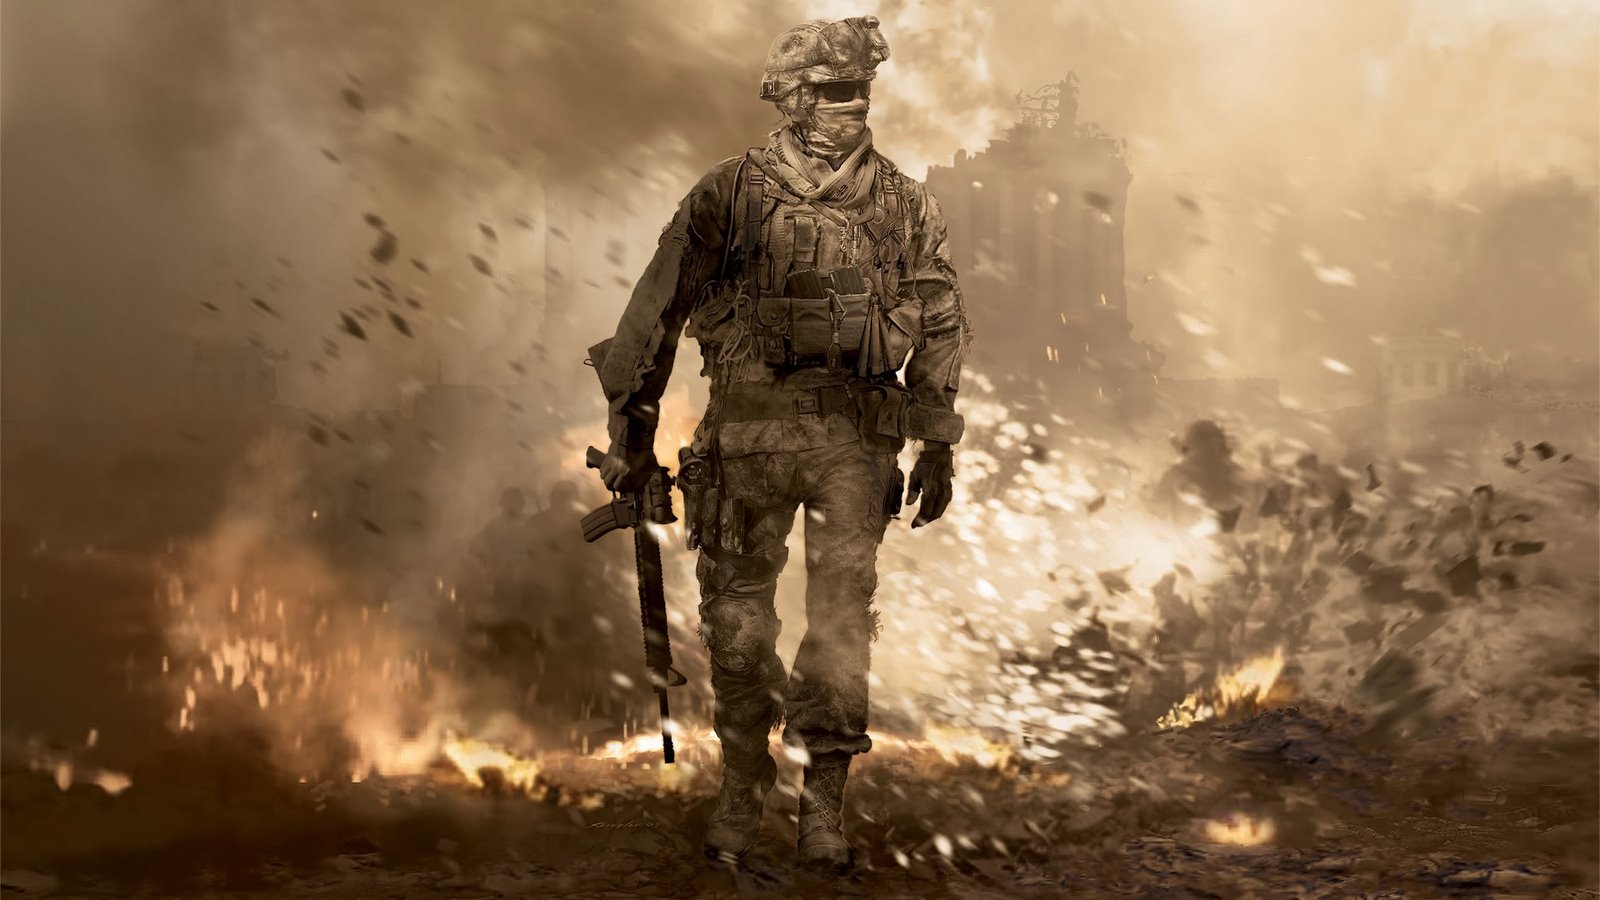 mingingthing: Call of Duty hd wallpaper